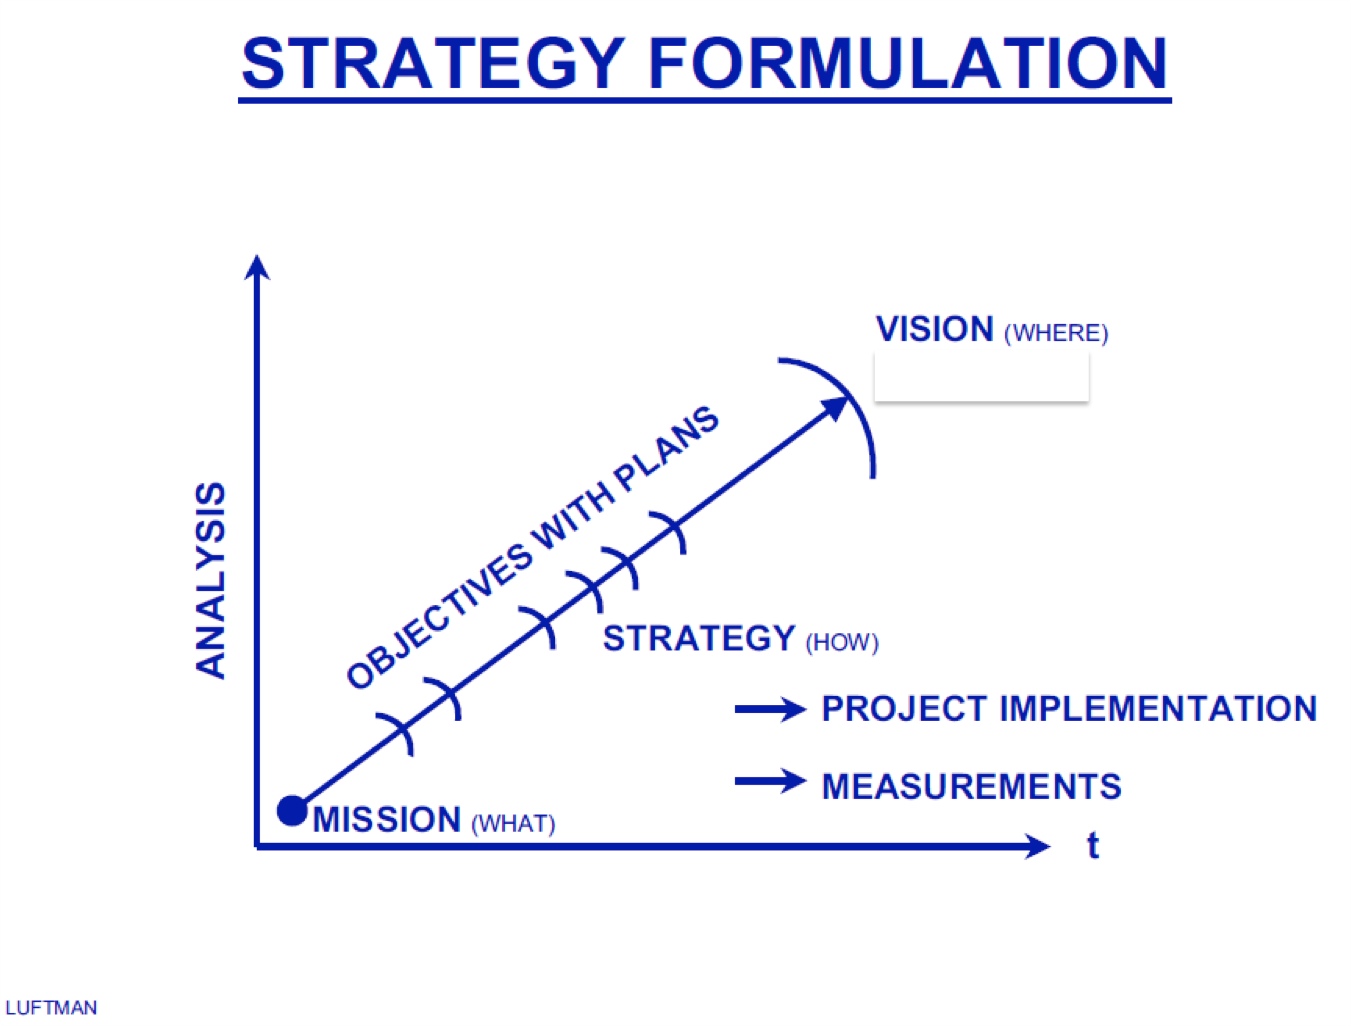 Strategy formulation